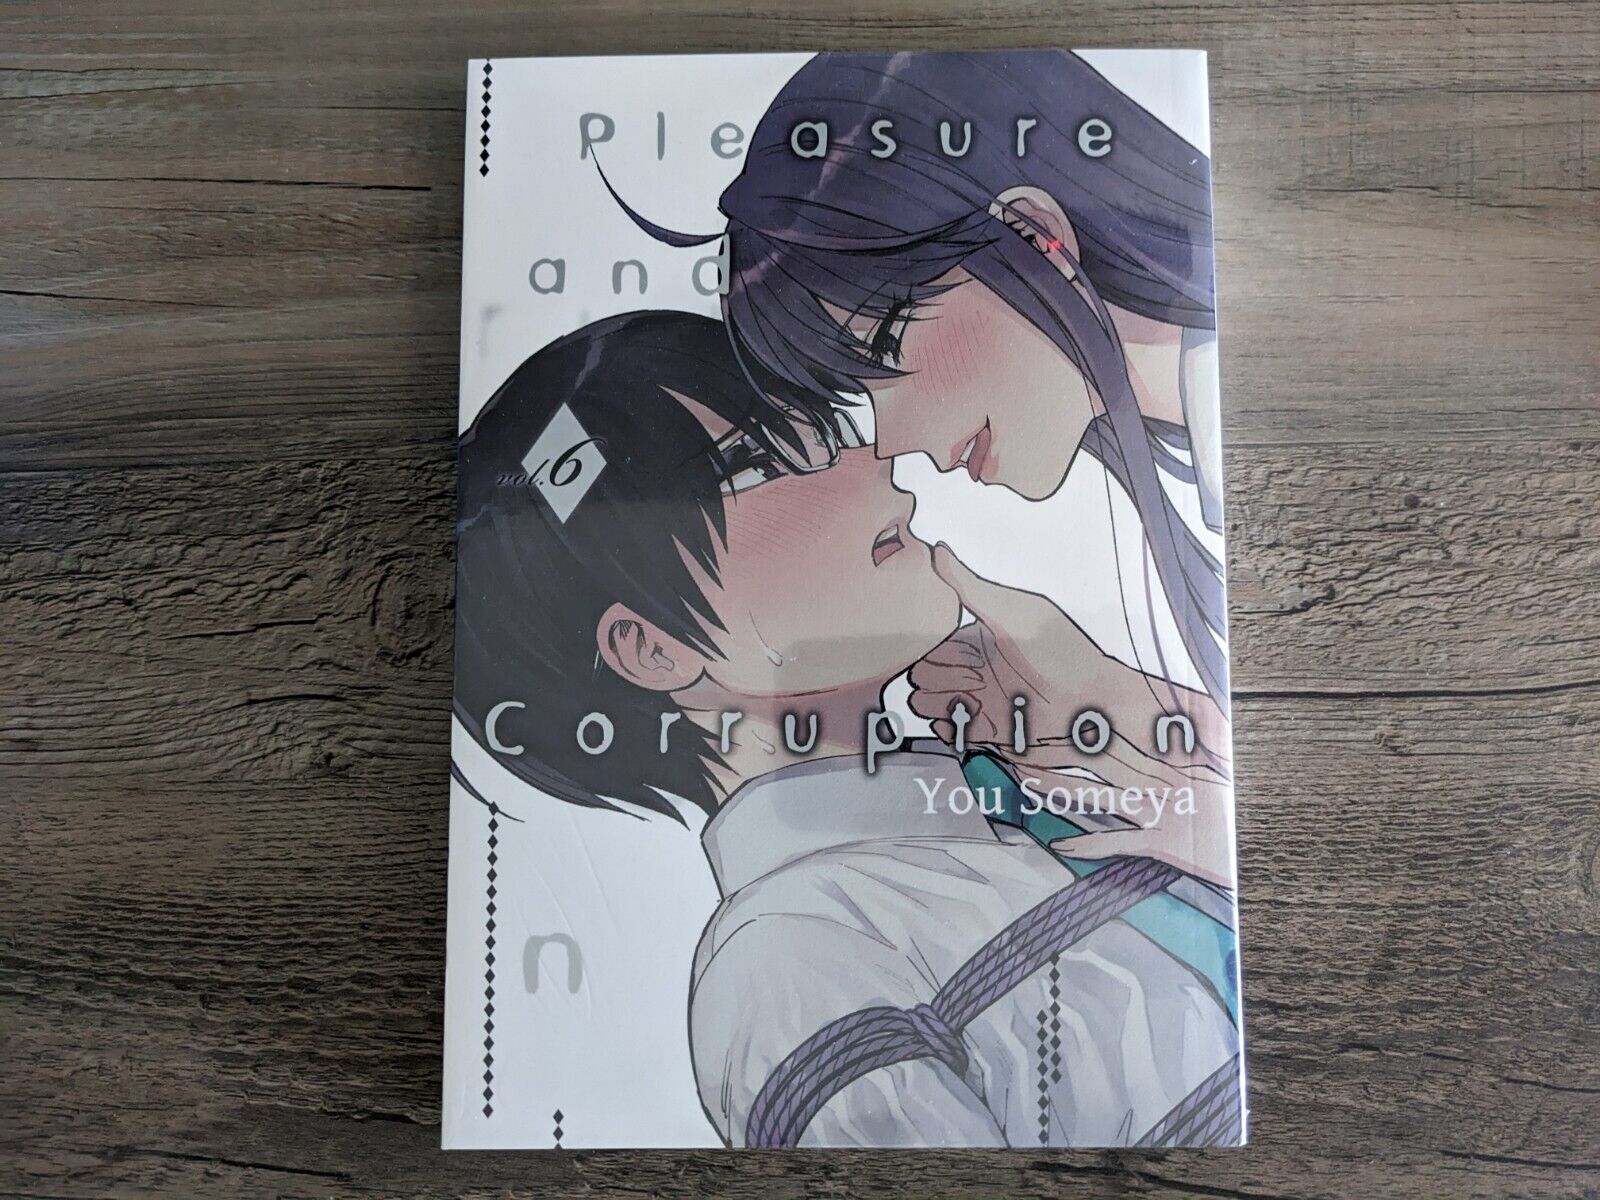 Pleasure and Corruption Vol 6 - Brand New English Manga You Someya Drama Seinen